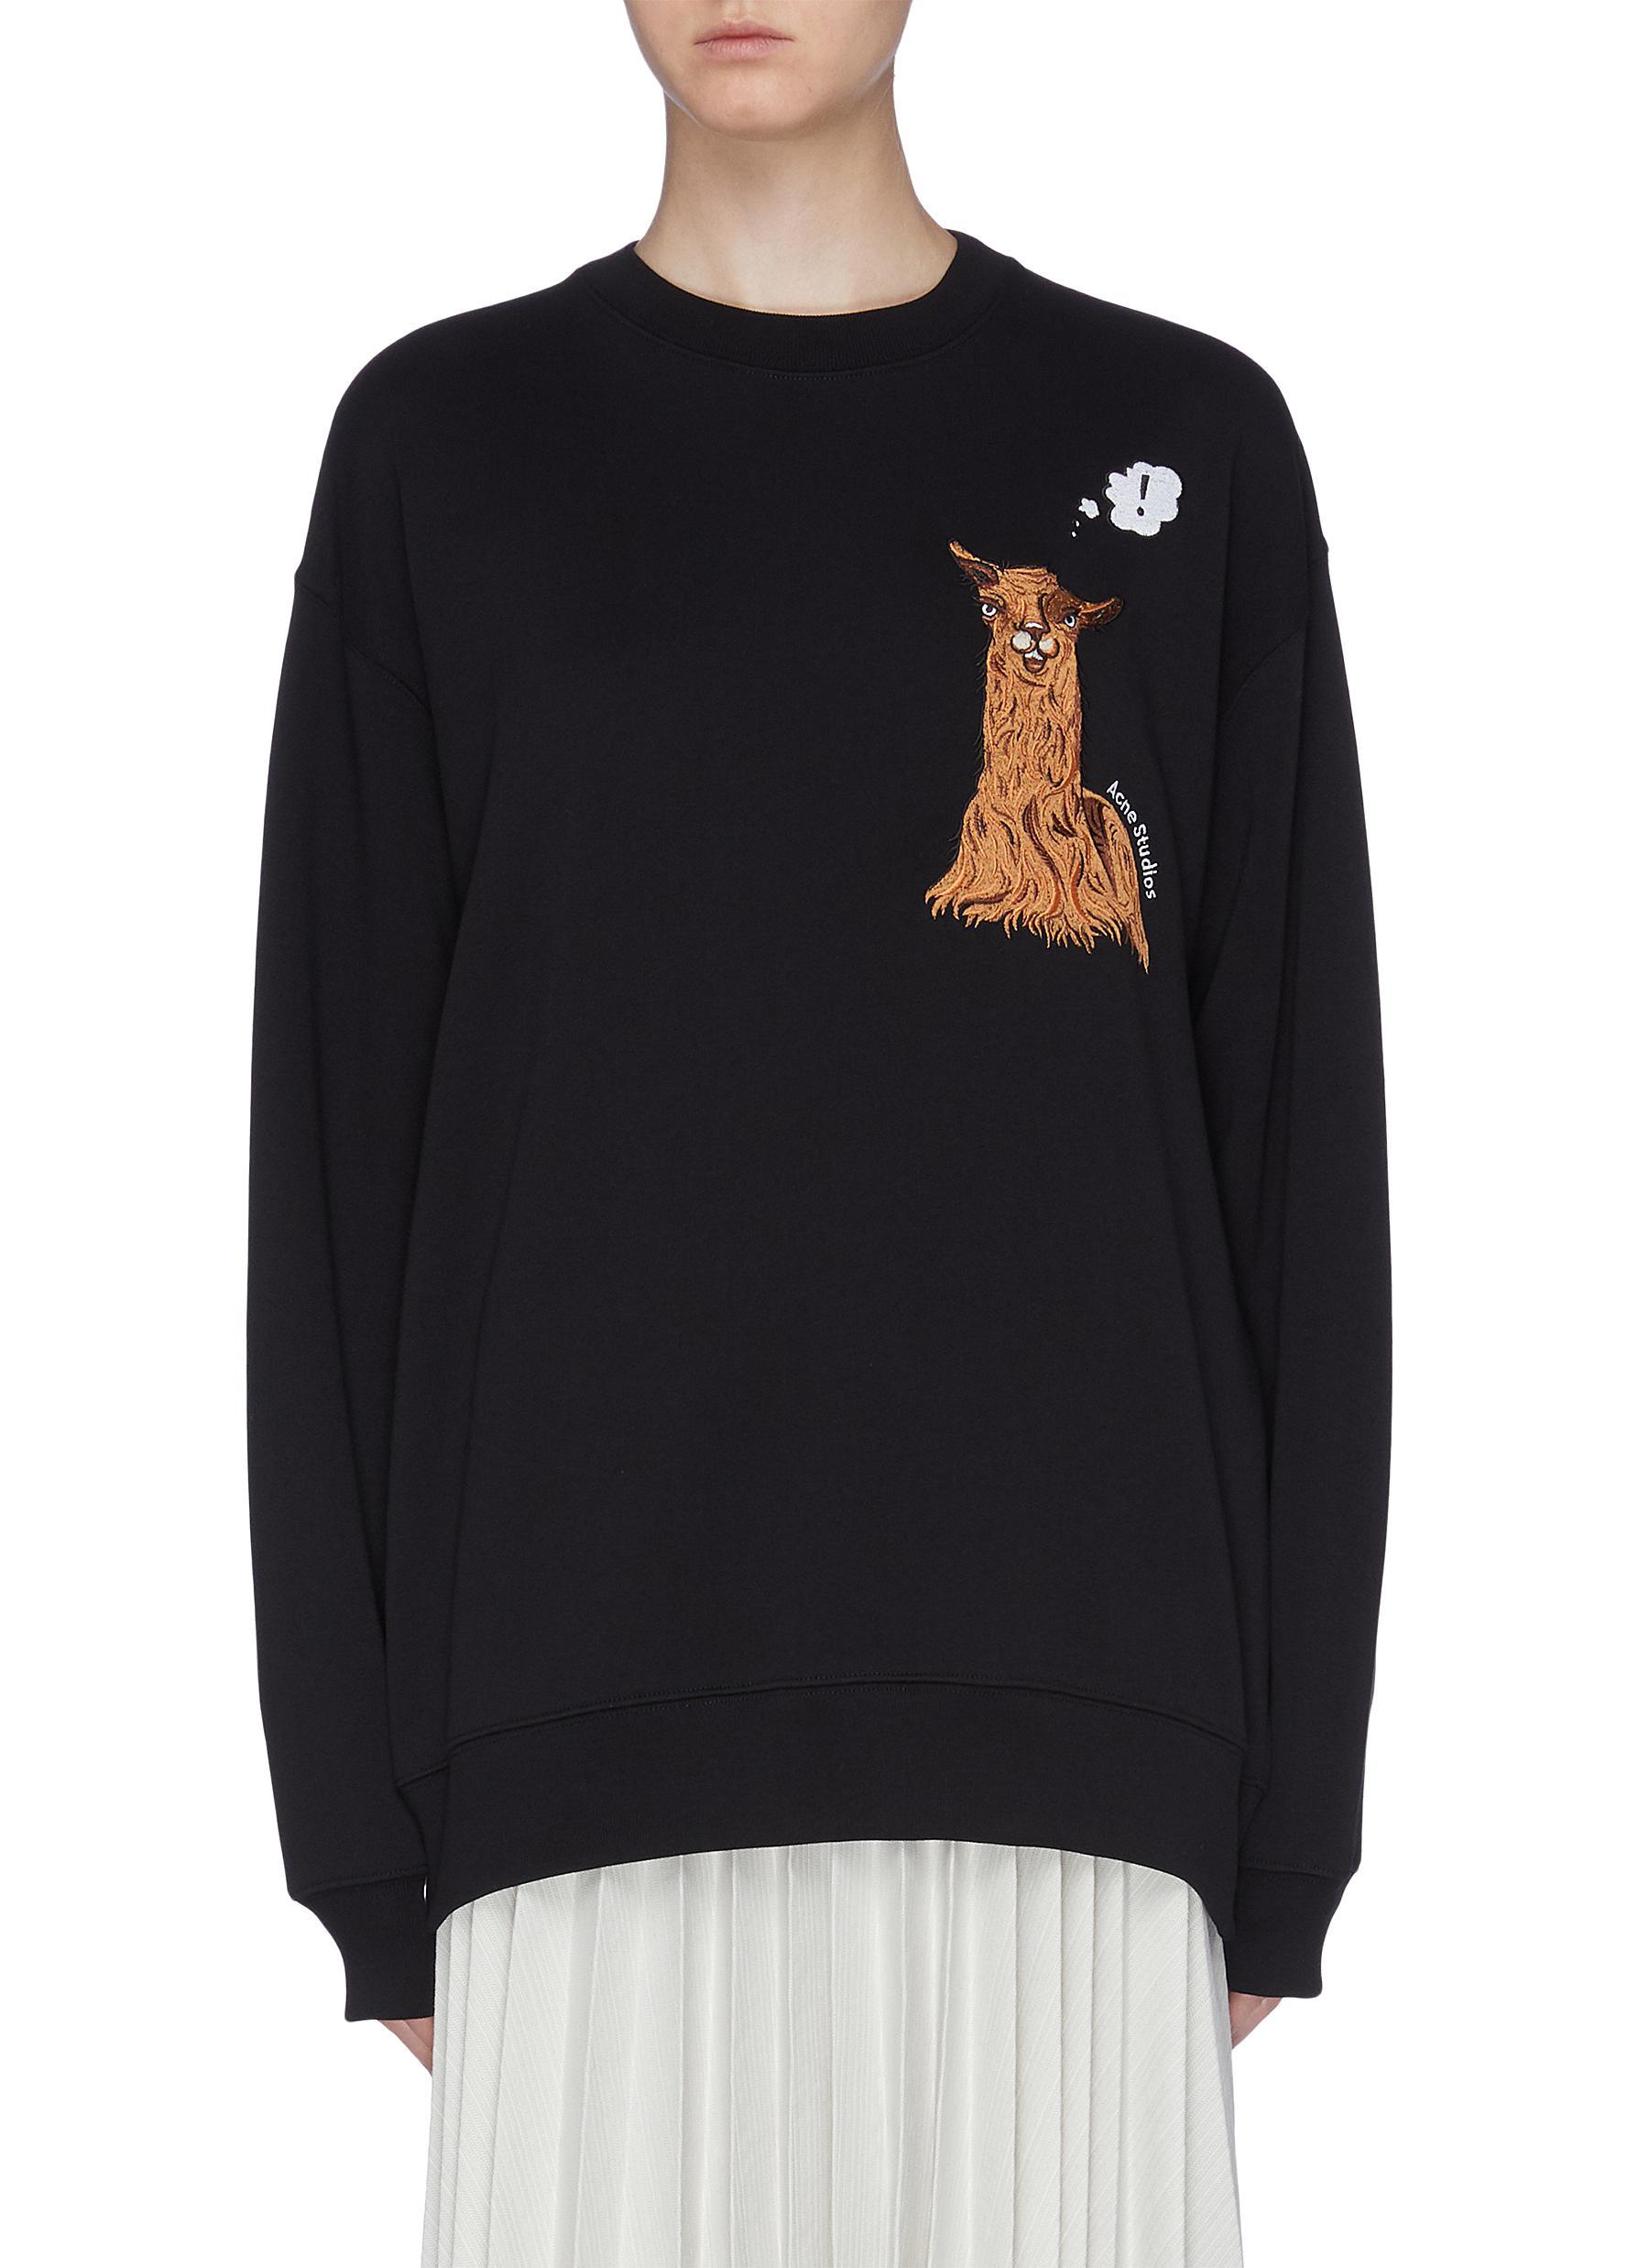 Acne Studios Cotton Animal Embroidered Oversized Sweatshirt in Black - Lyst